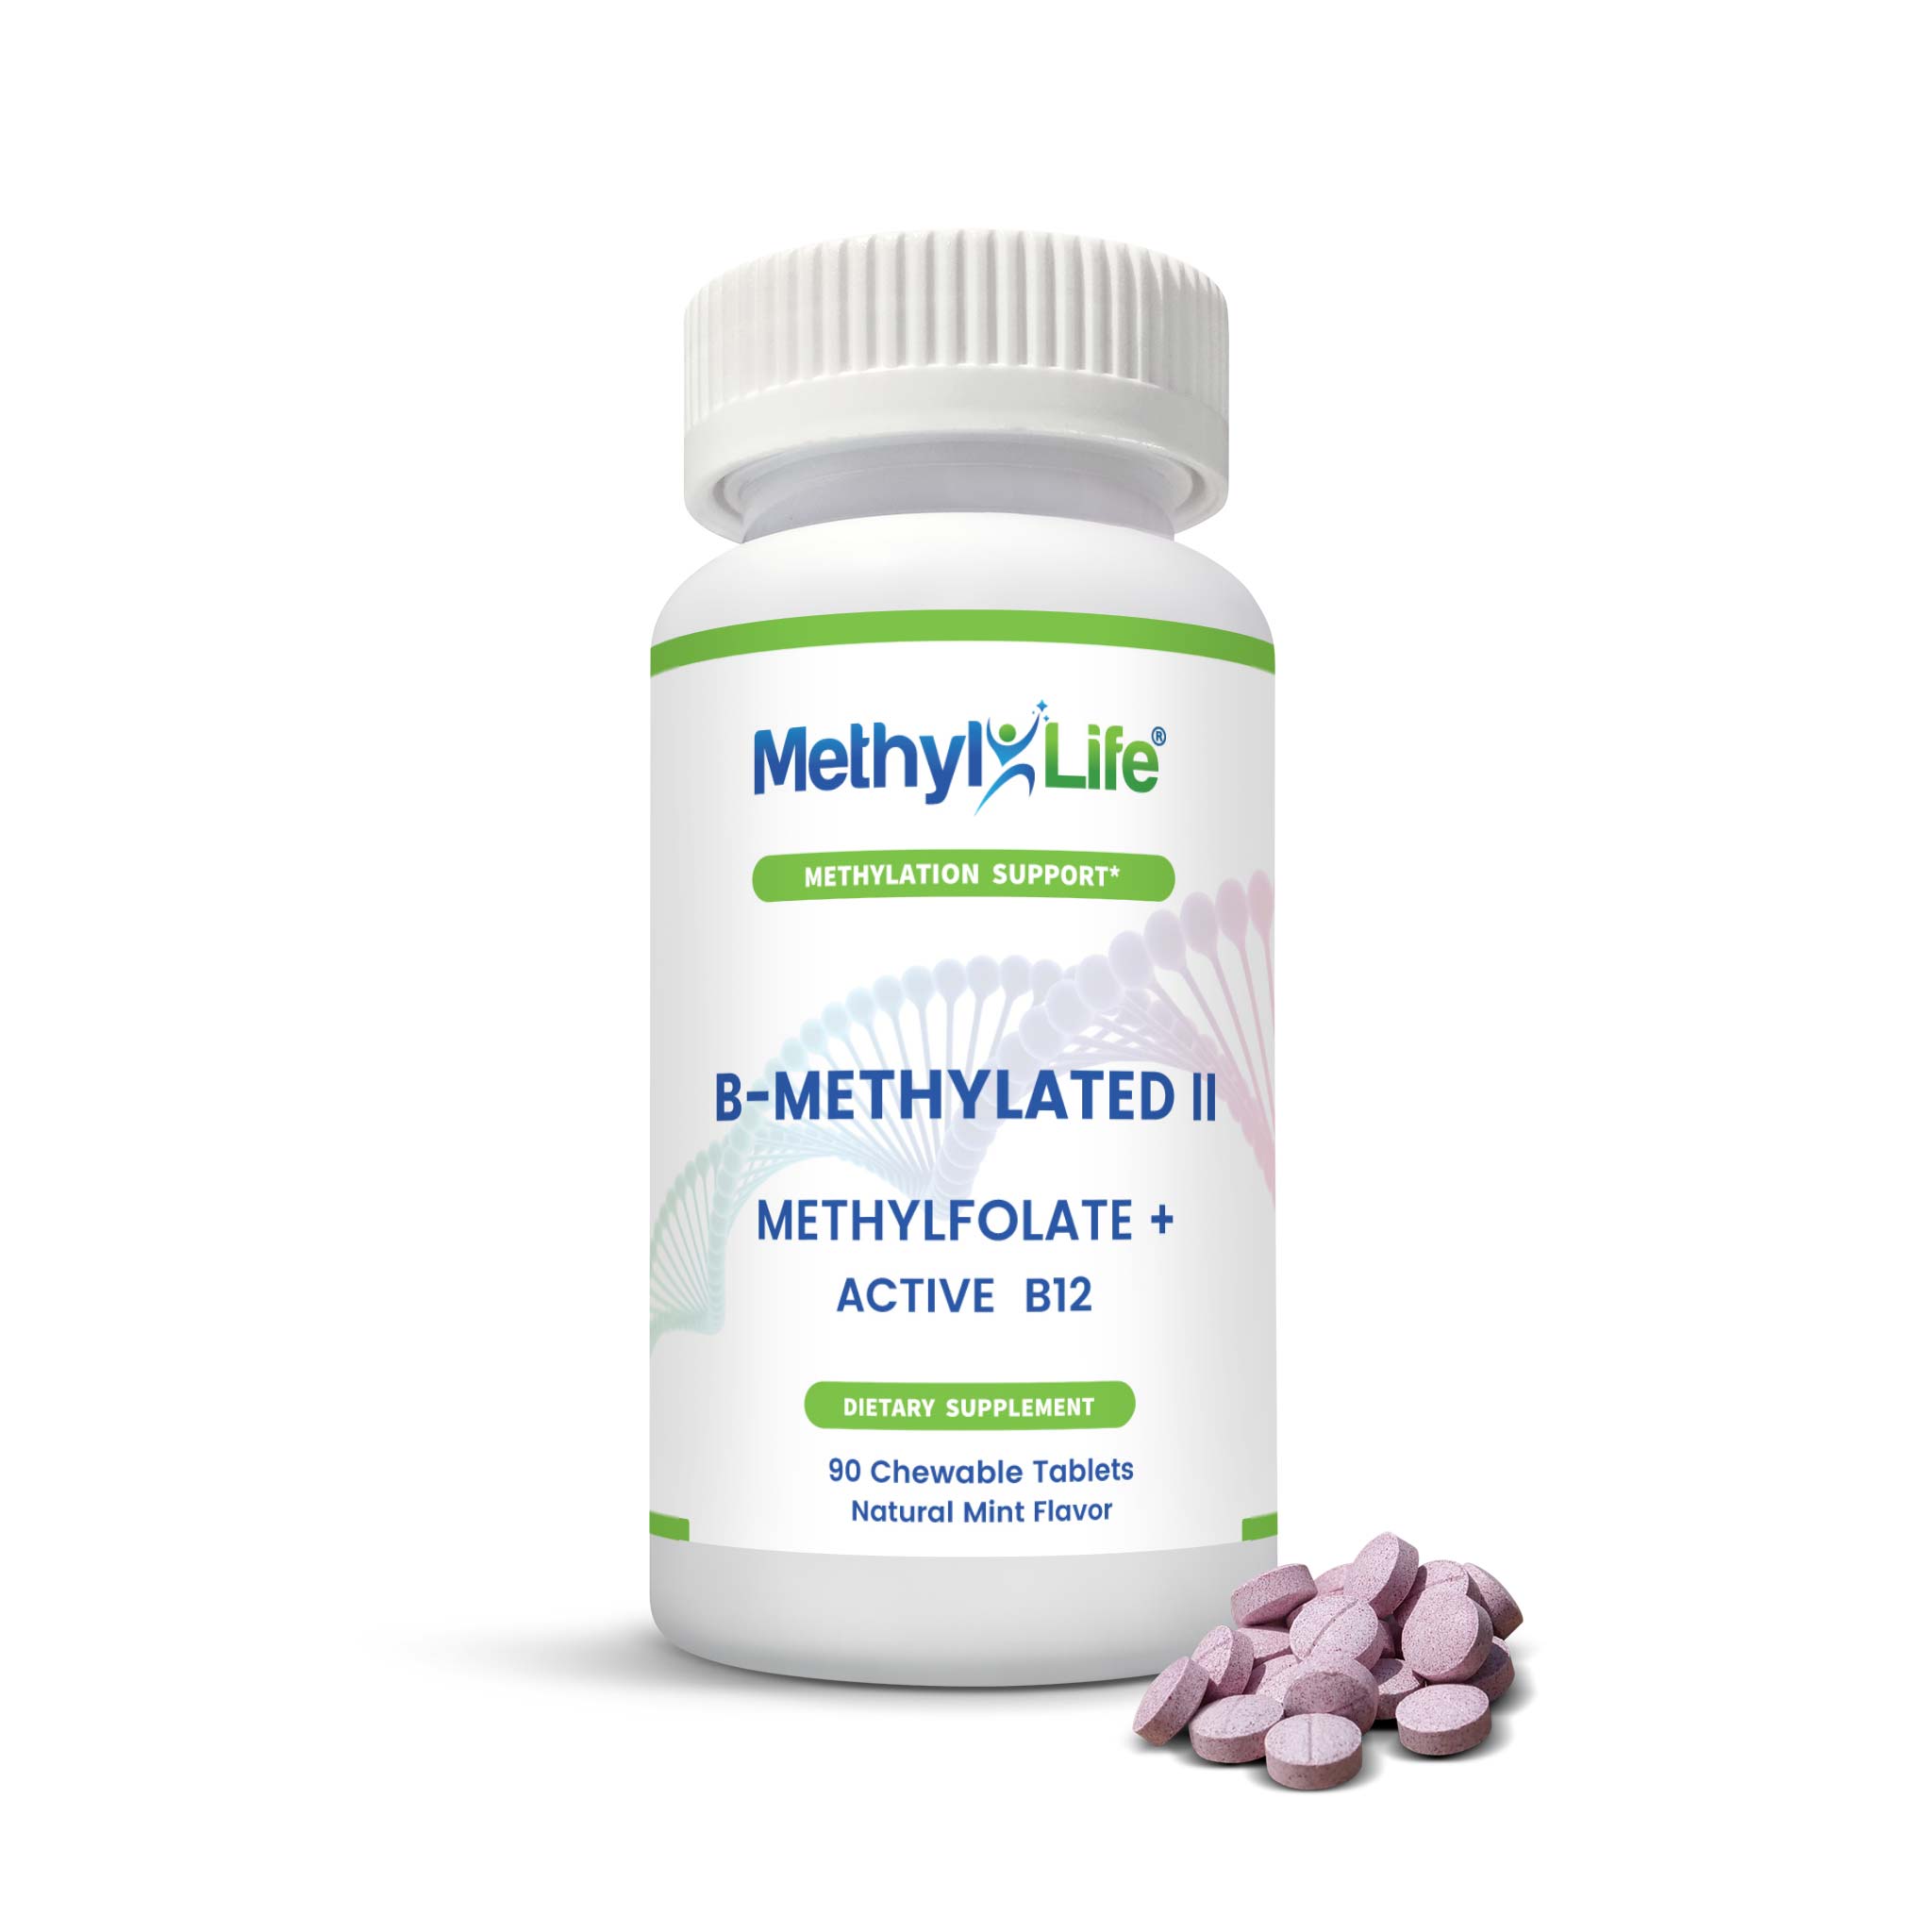 B-Methylated-II - L-Methylfolate 3 mg + Methylcobalamin 3.75 mg - bottle + 90ct chewable tablets - Methyl-Life